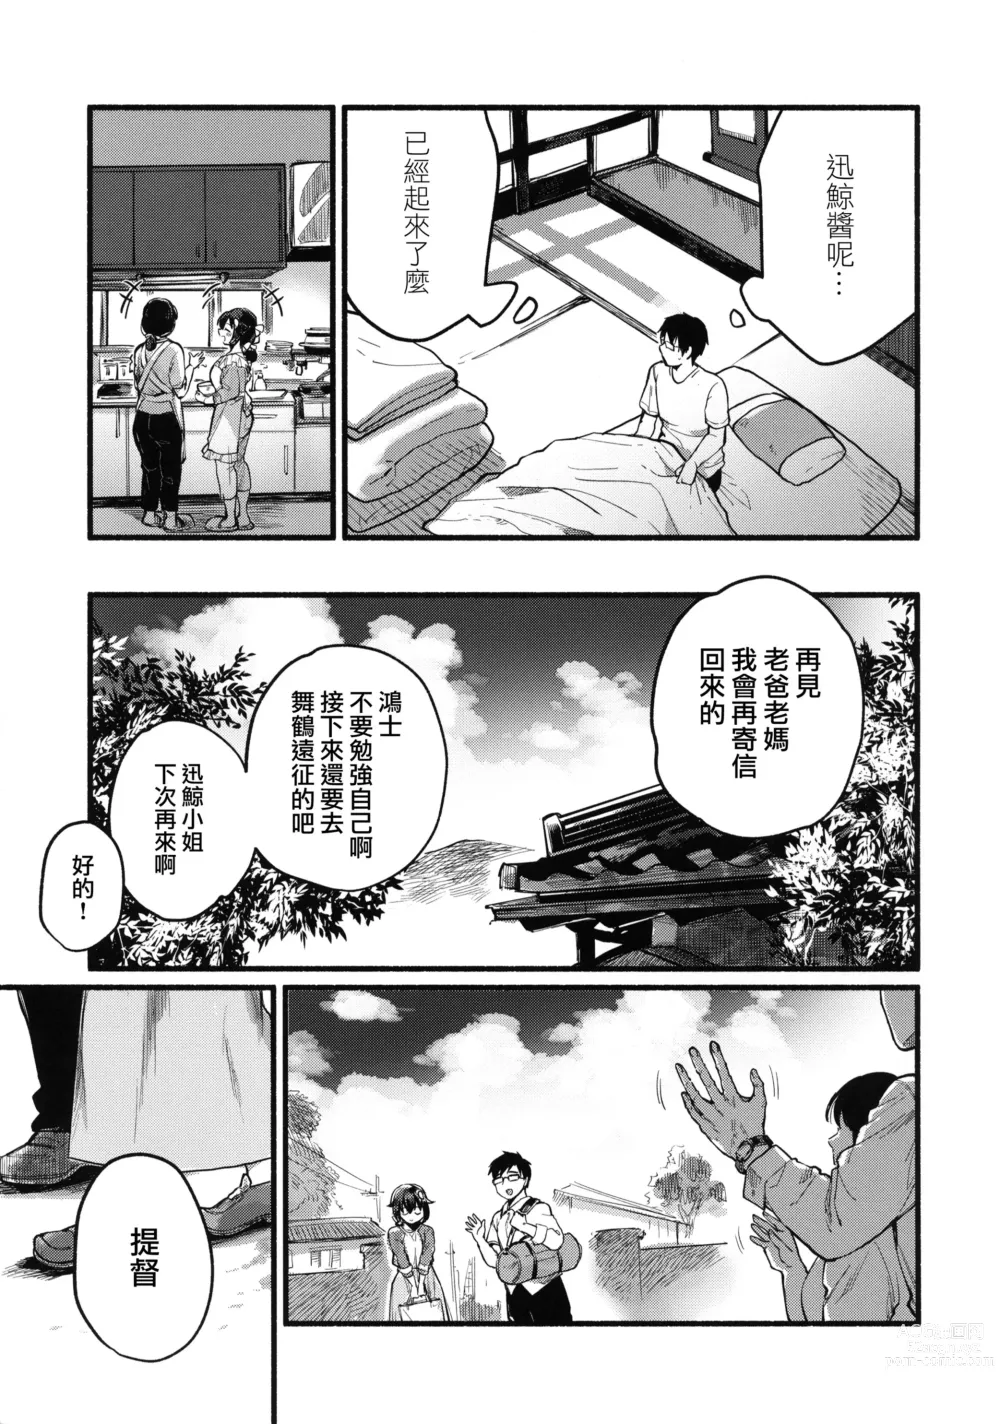 Page 22 of doujinshi 跟迅鯨姐姐度過暑假